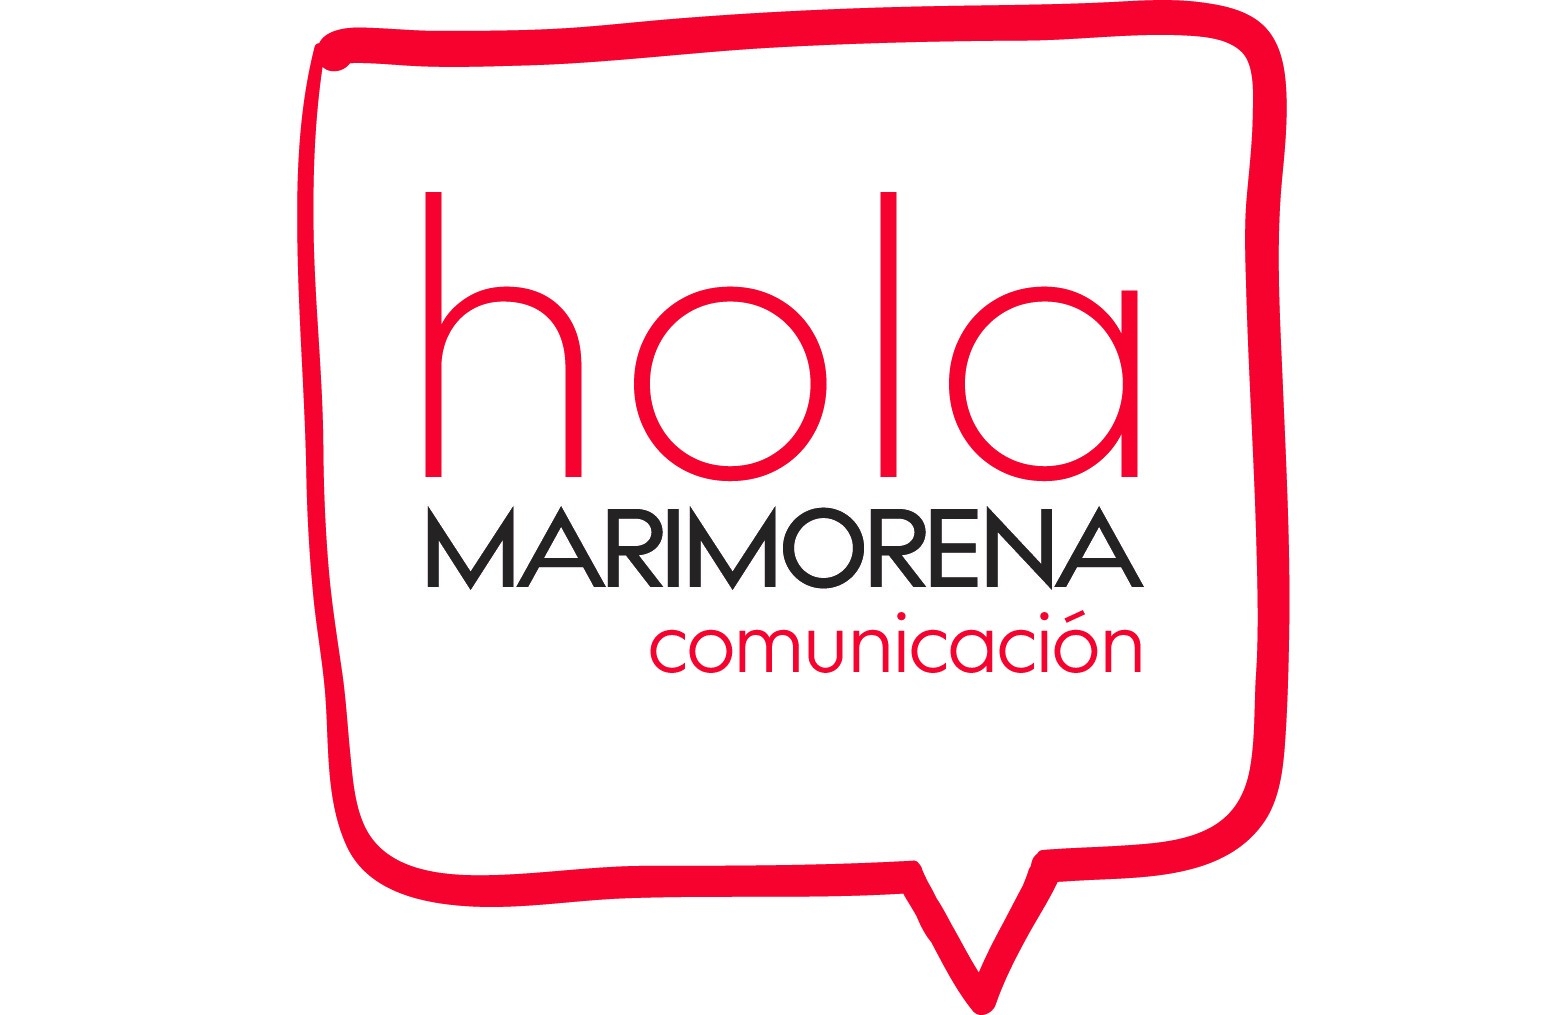 Hola Marimorena Comunicacio